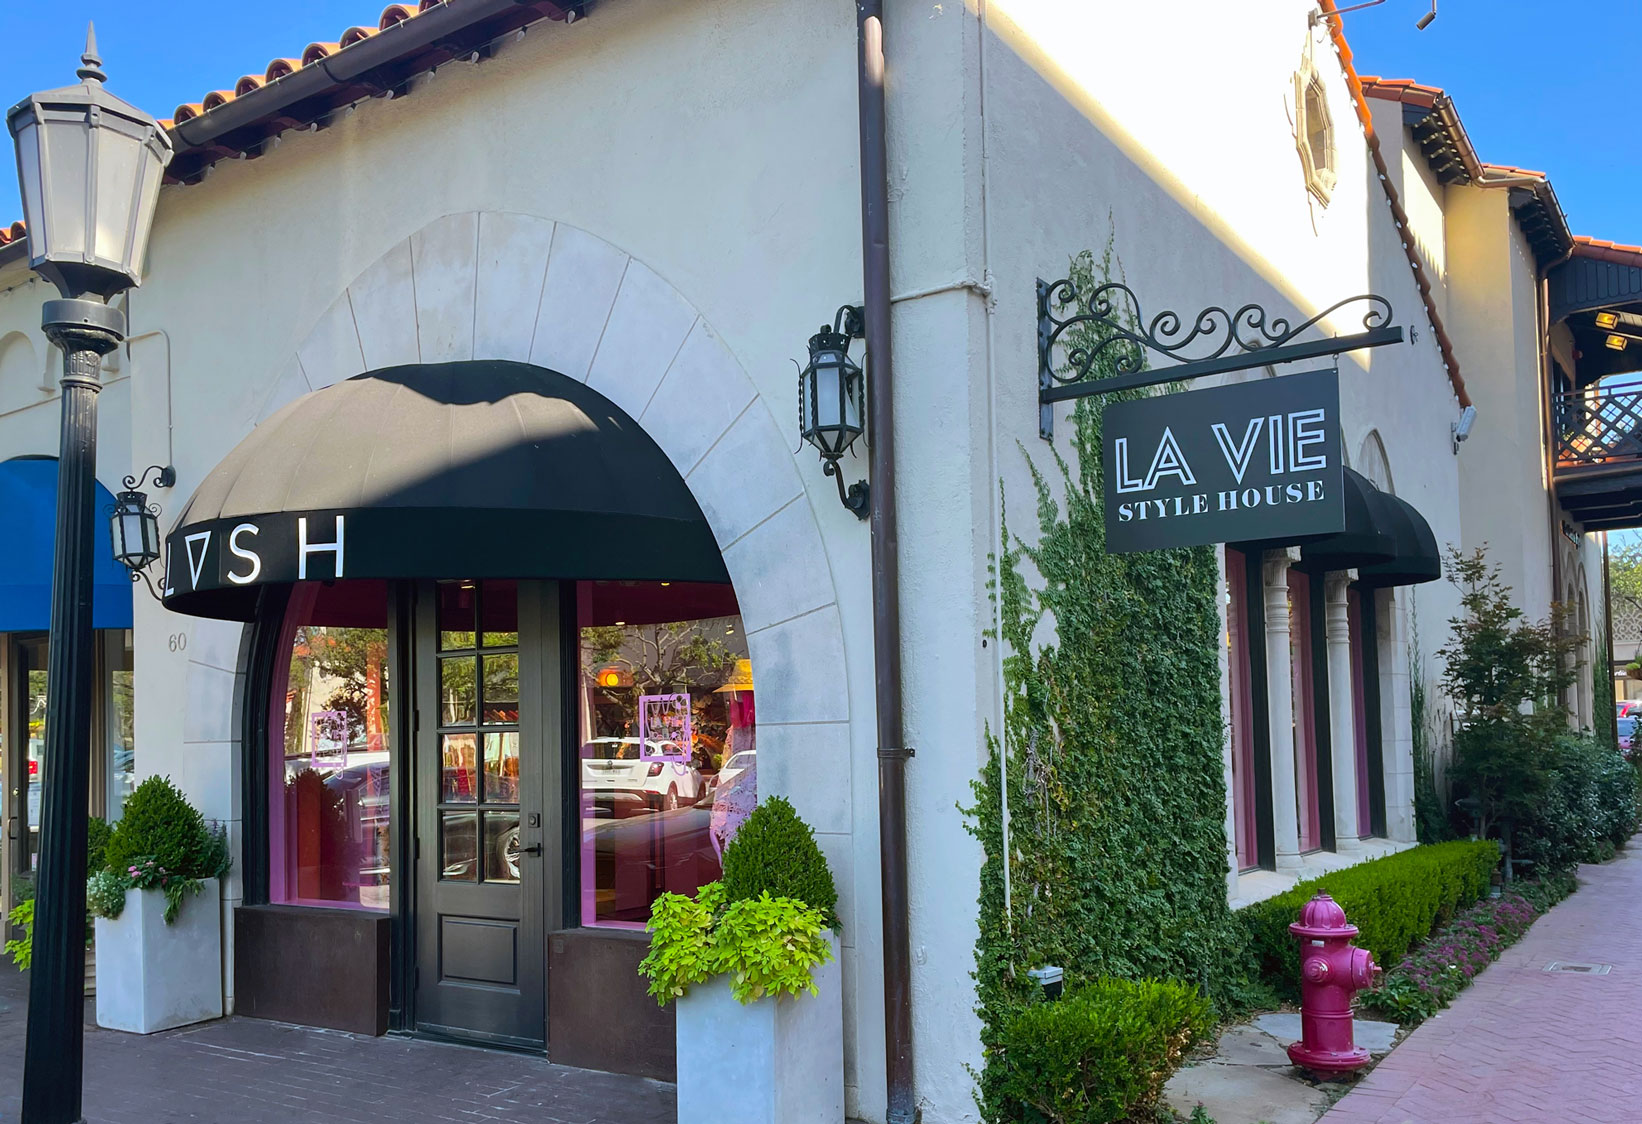 La Vie Style House store front in Highland Park Village